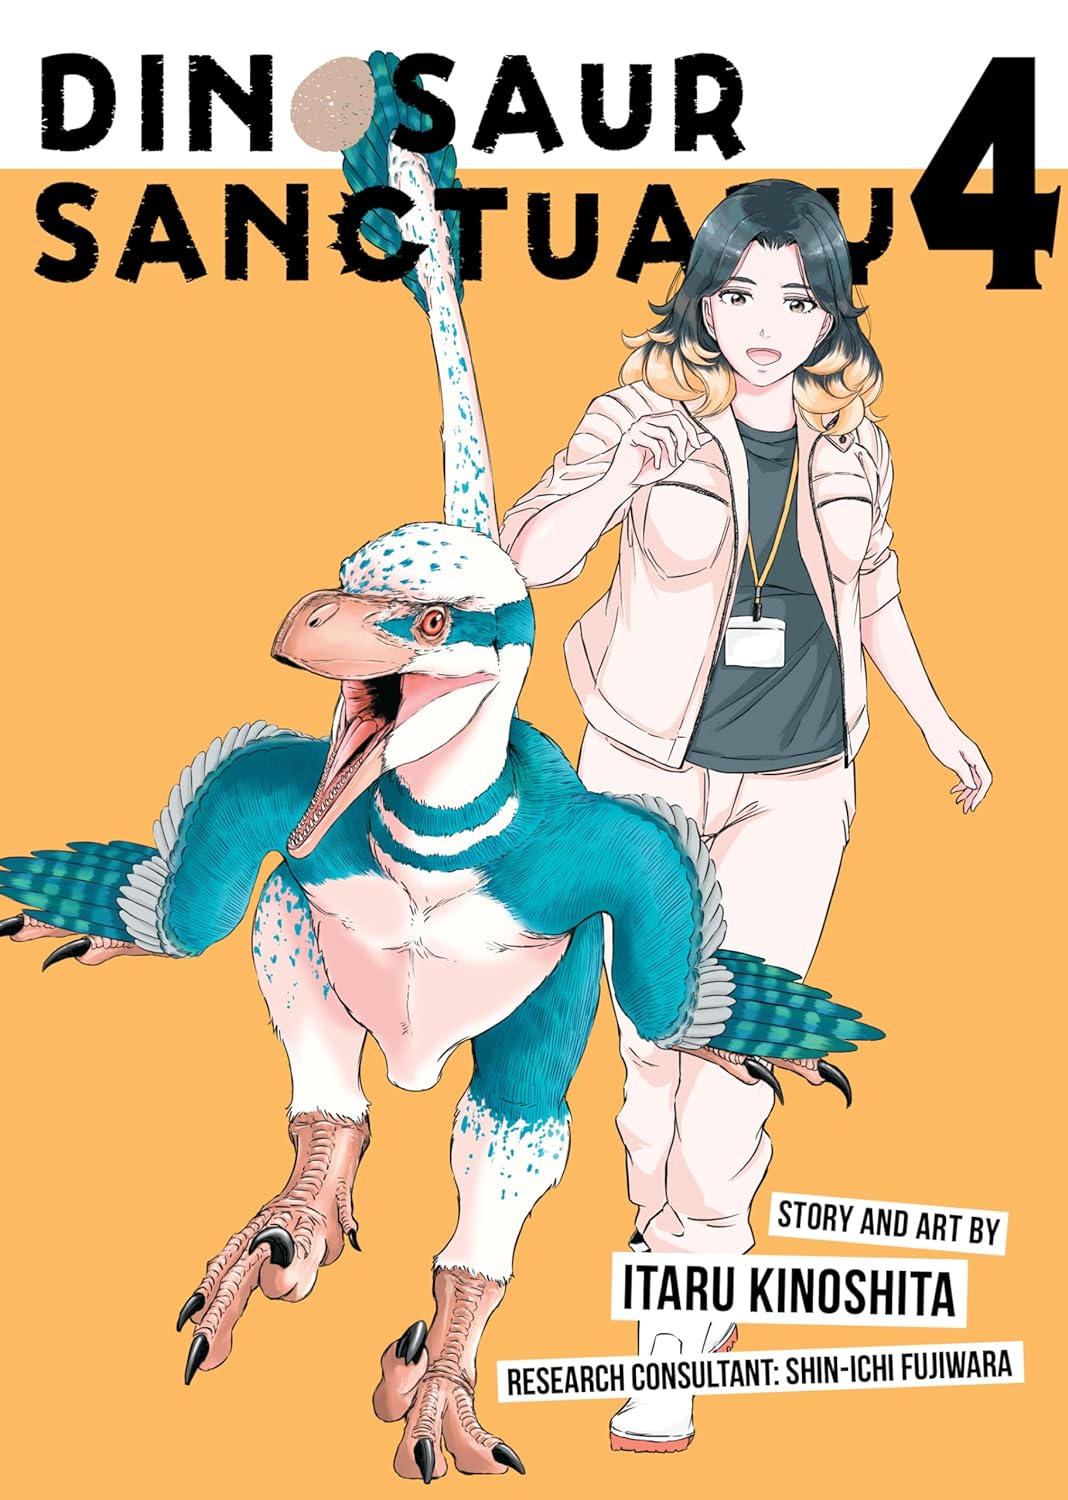 Dinosaur Sanctuary Vol. 04